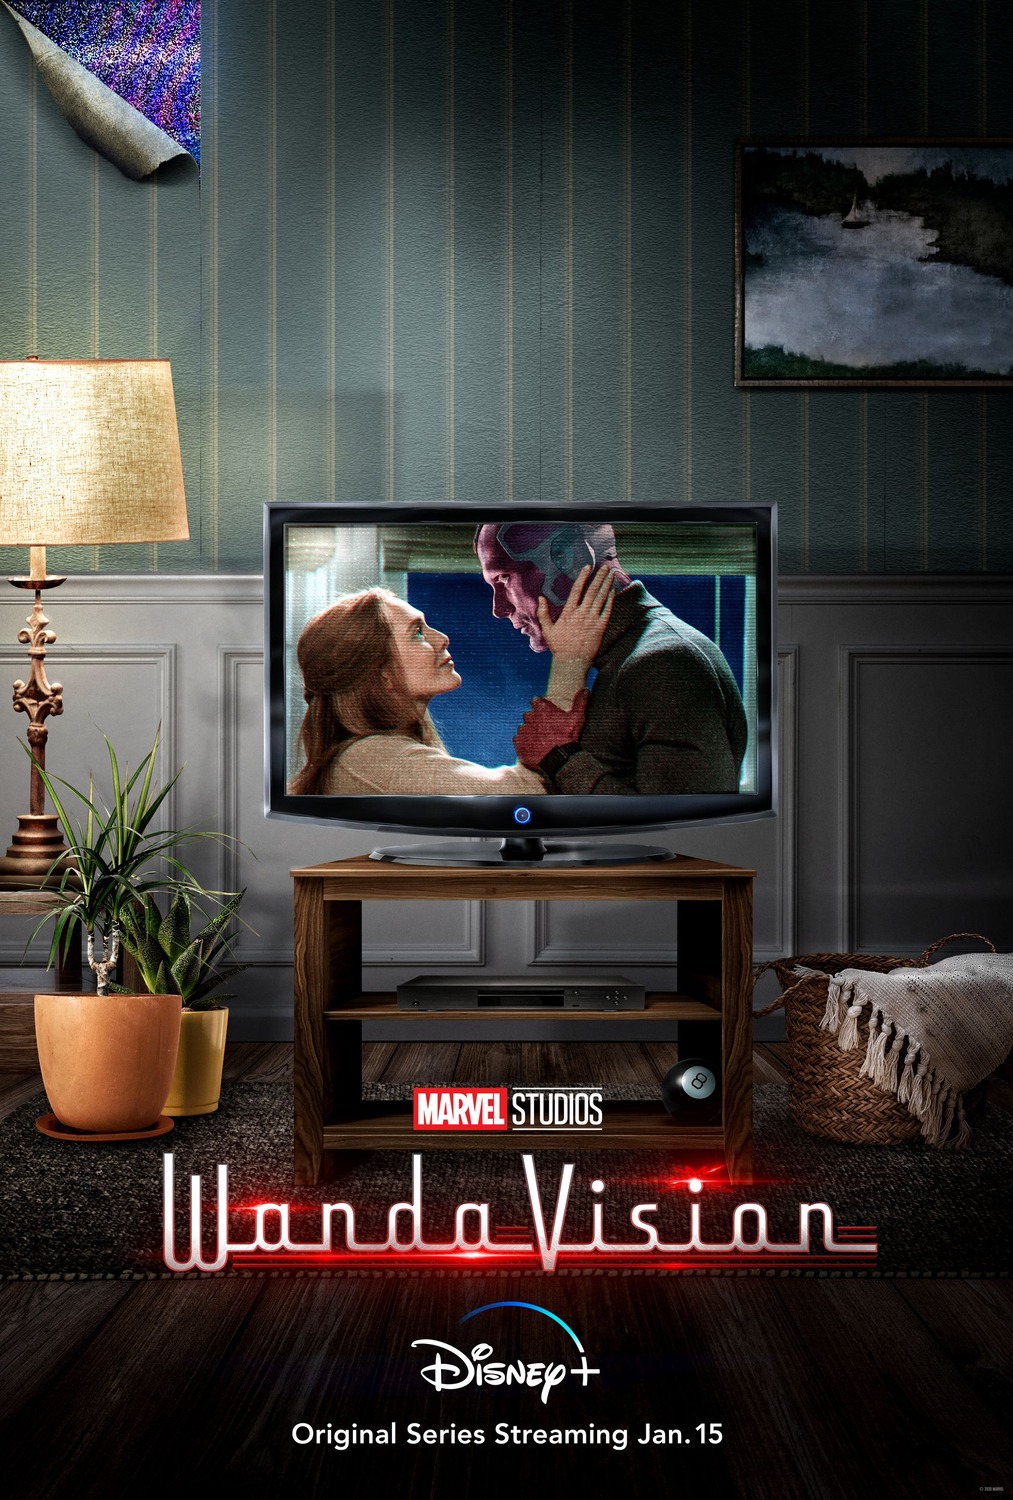 Extra Large TV Poster Image for WandaVision (#7 of 26)